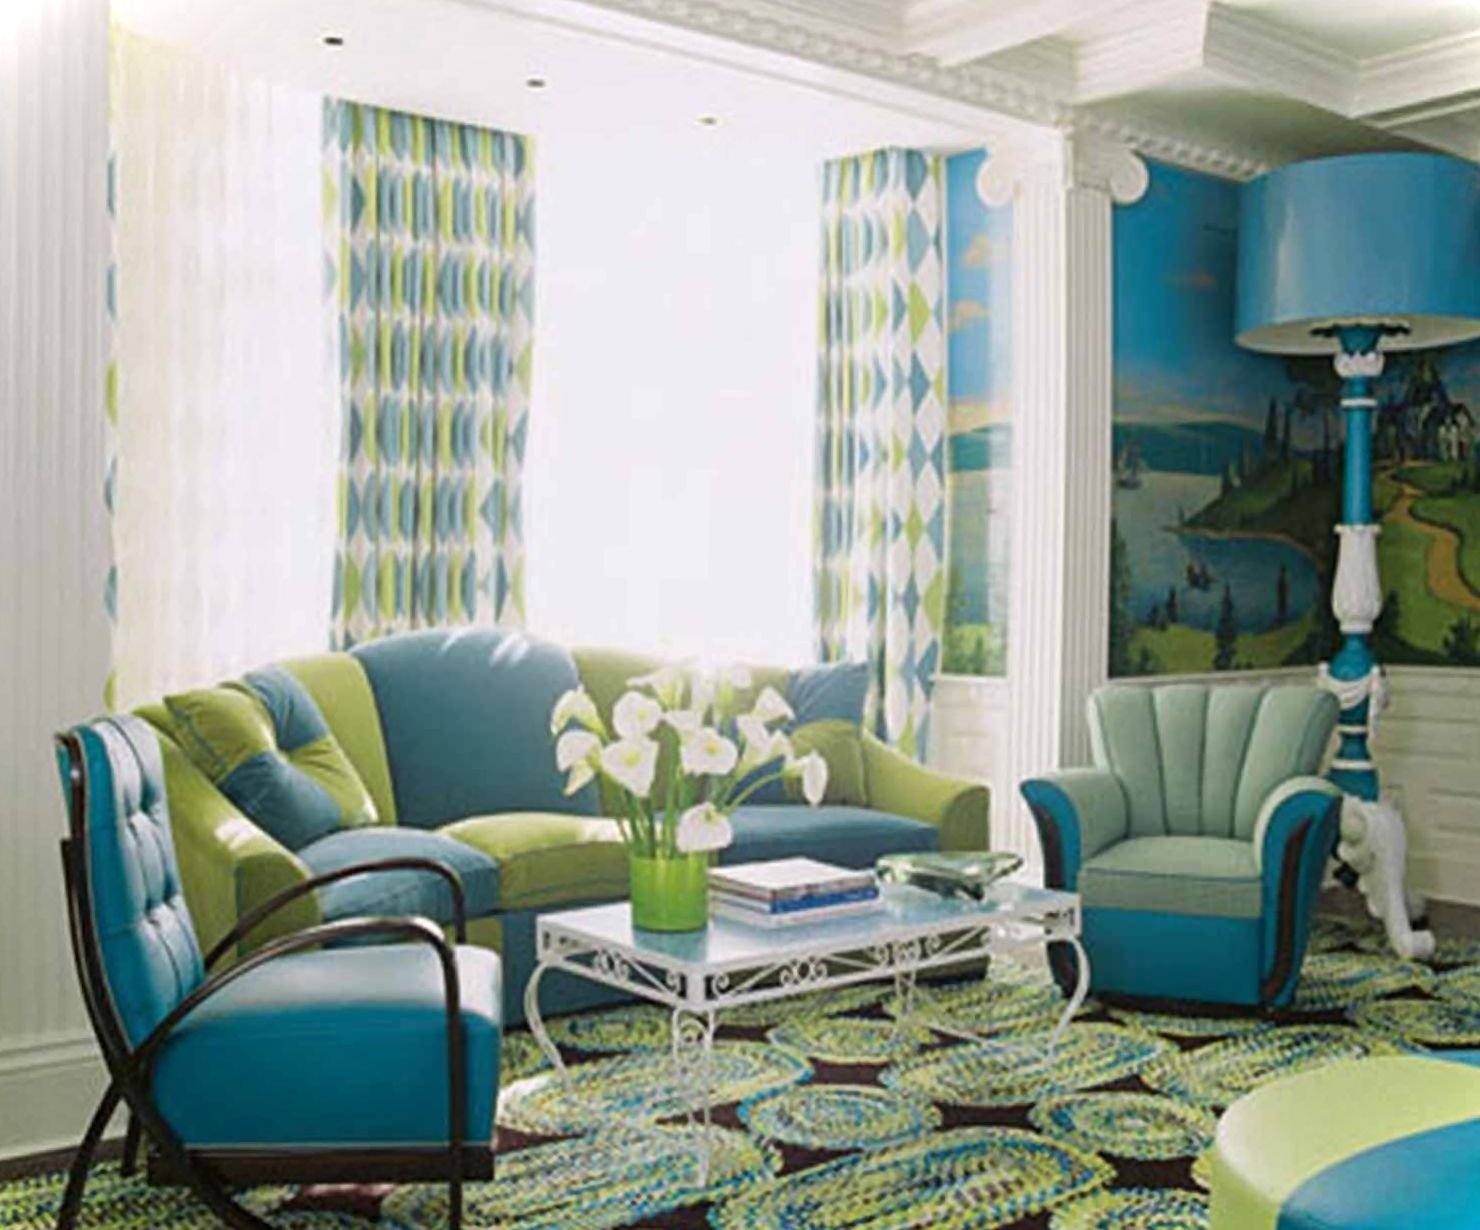 10 Elegant Blue And Green Living Room Ideas amazing of blue and green living room inspiration on blue 4021 2022